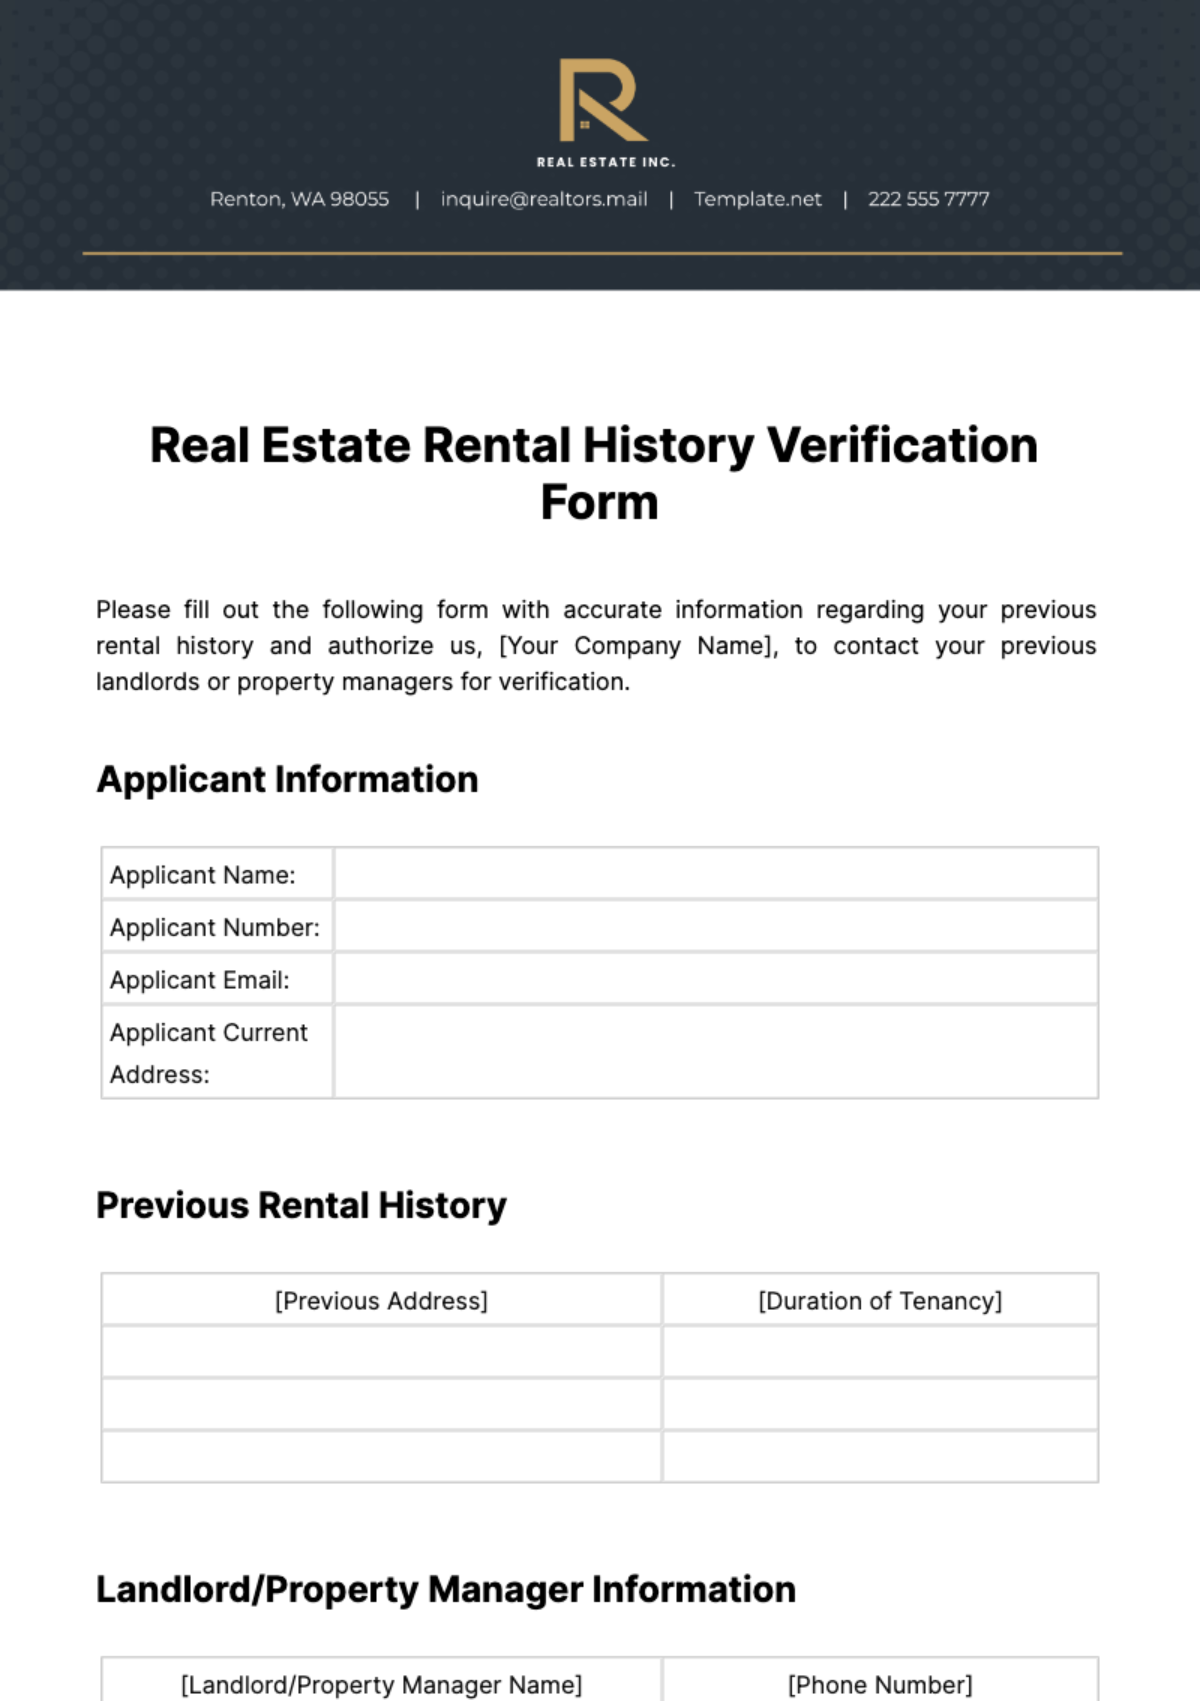 Real Estate Rental History Verification Form Template